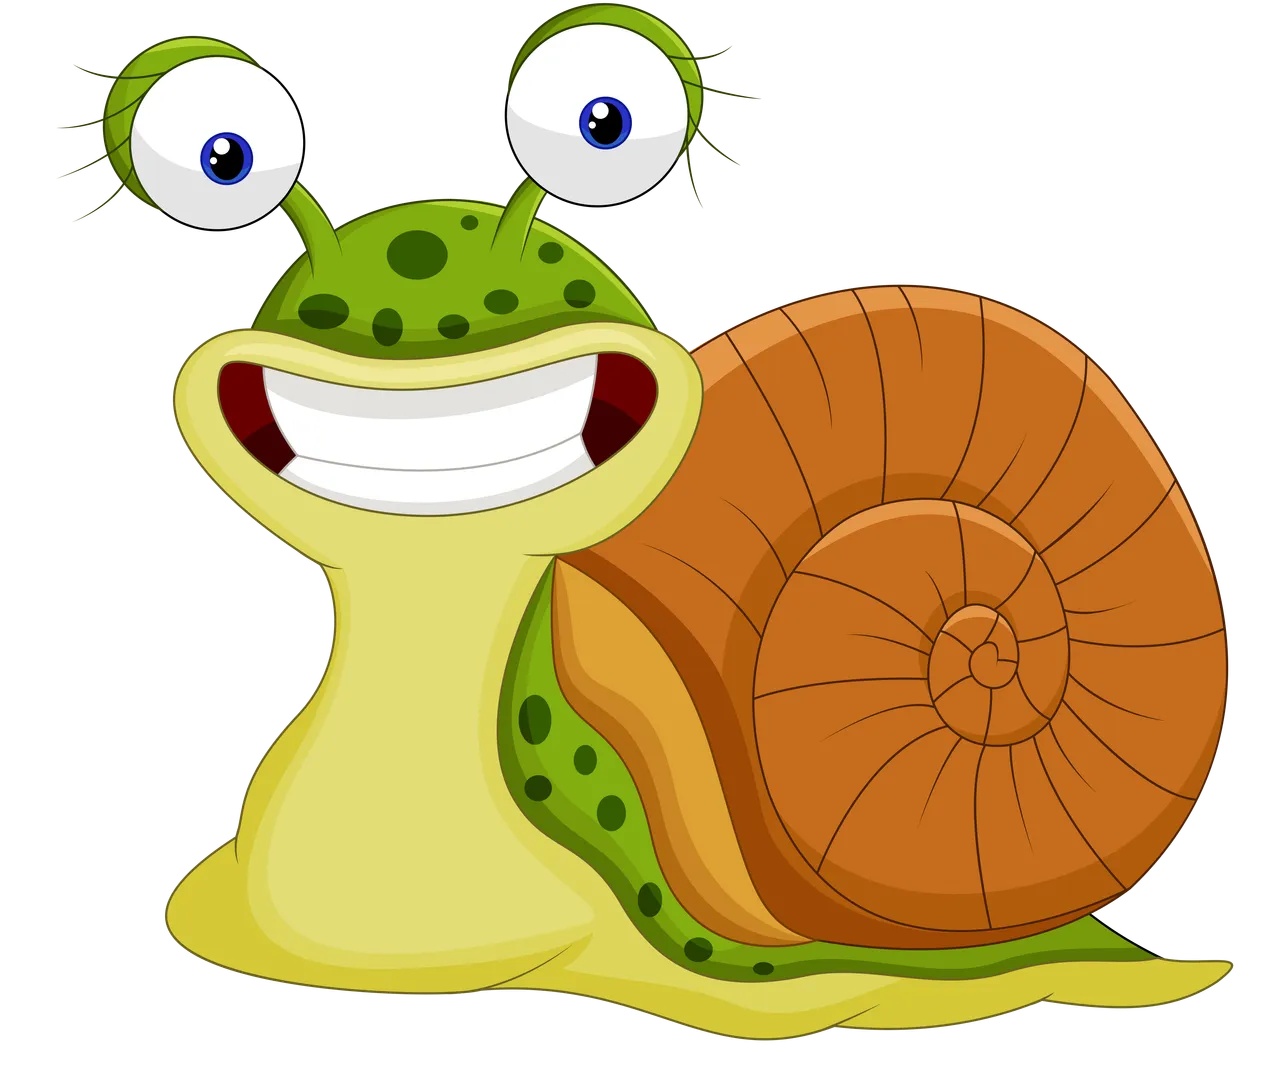 kisspng-snail-cartoon-royalty-free-illustration-smiling-cartoon-snail-5a9267eac943b2.6961293915195442988244.png